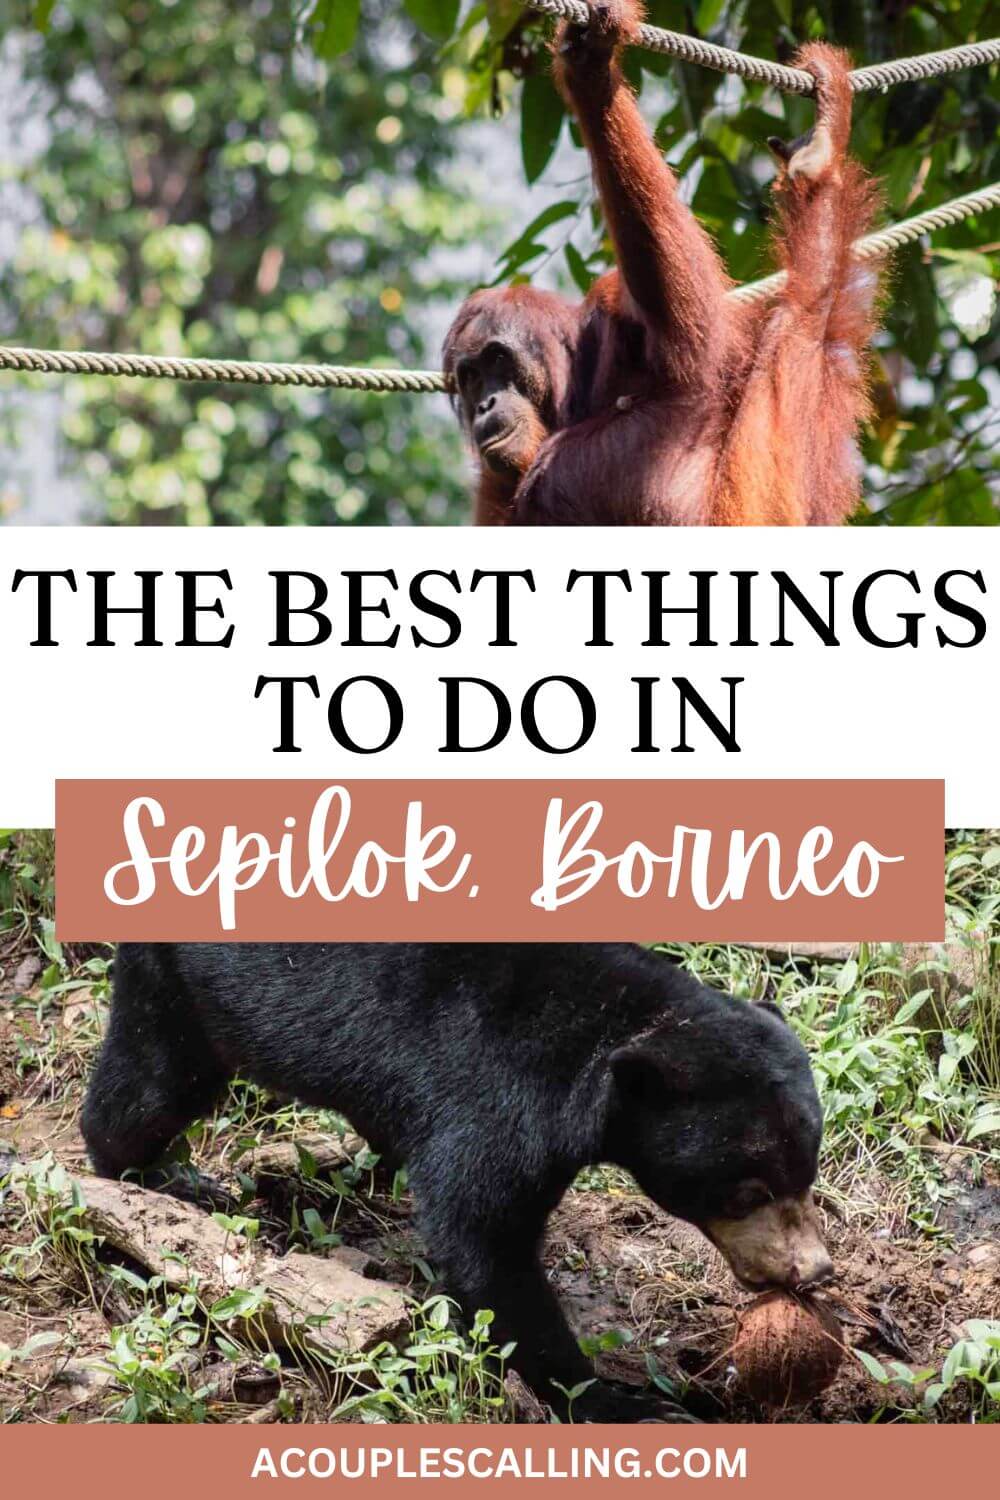 Things to do in Sepilok